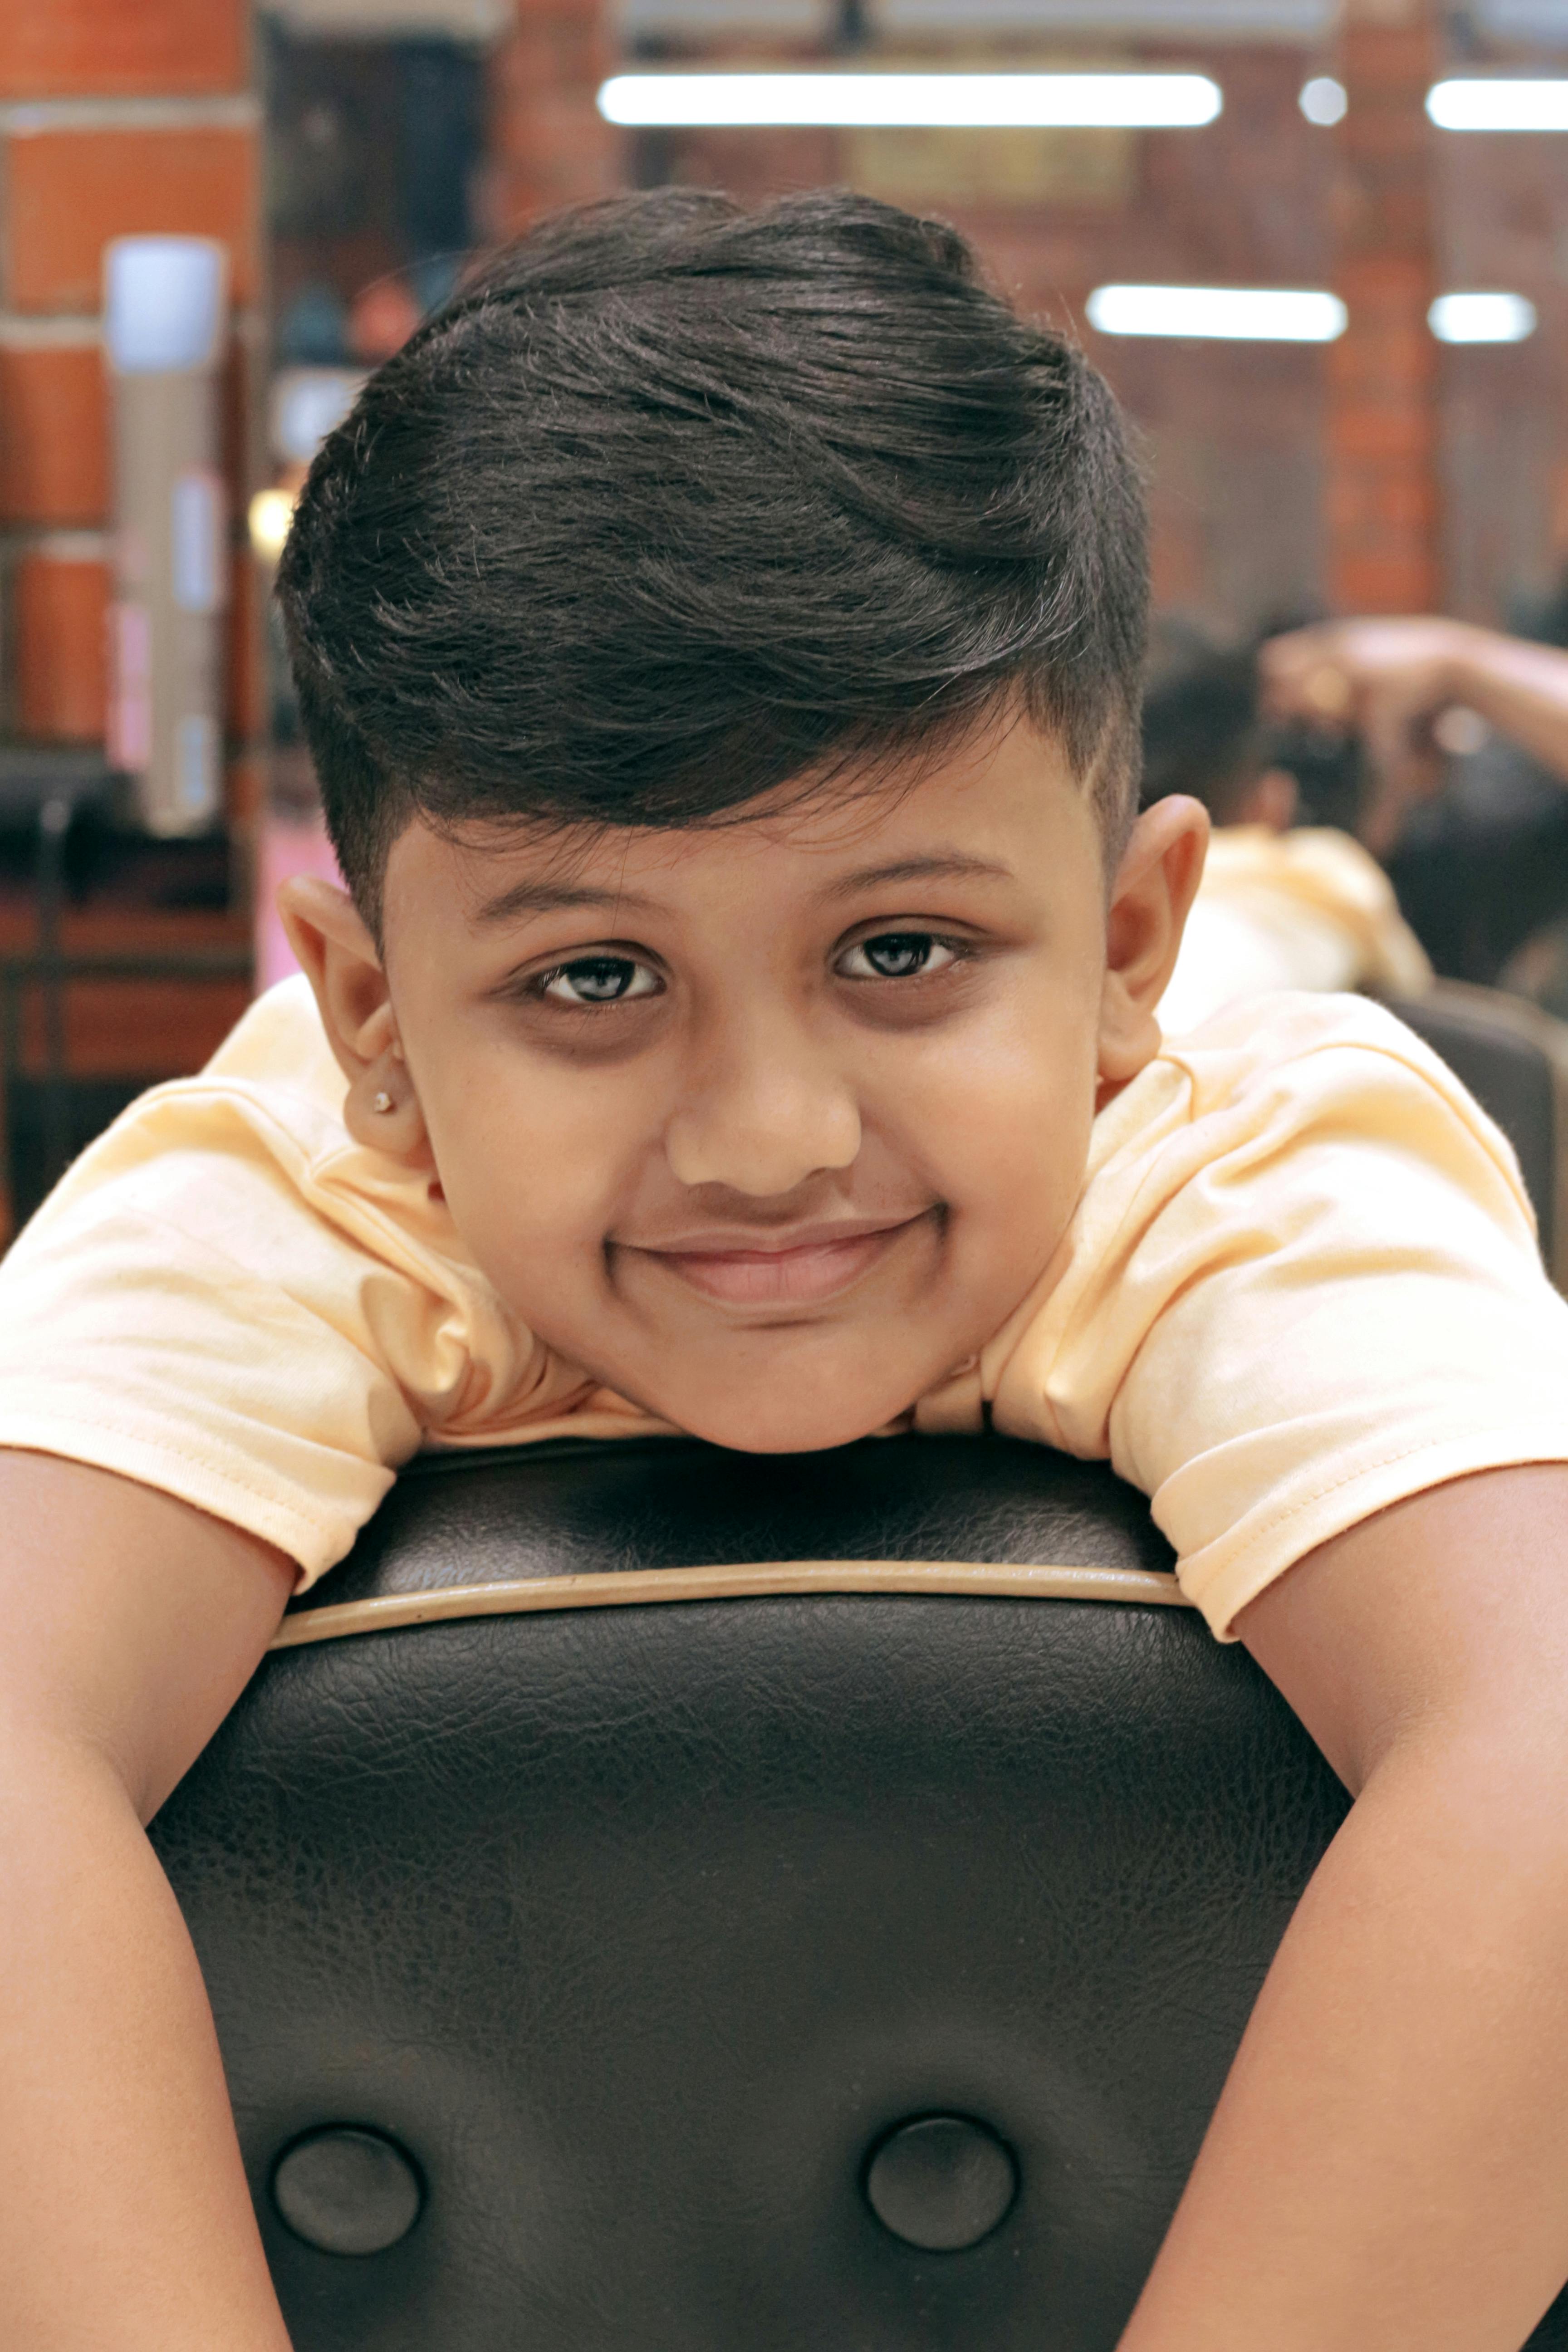 Baby Haircut for Boy | TikTok